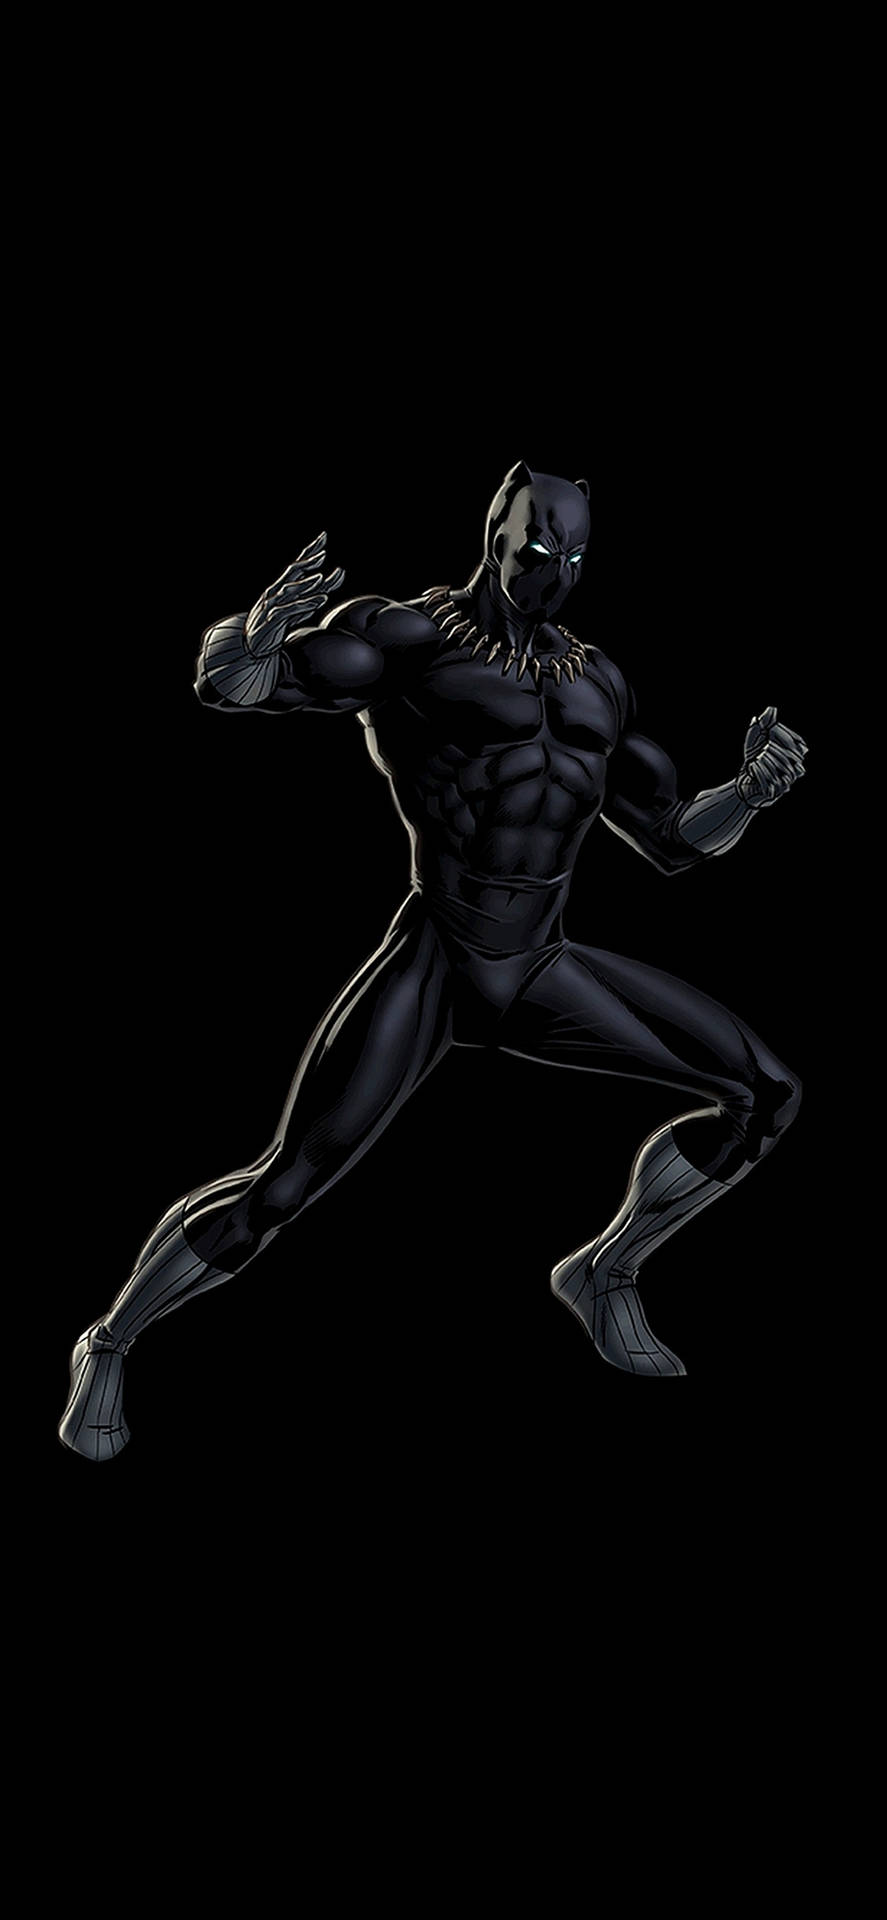 Black Panther Superhero Marvel Game Background